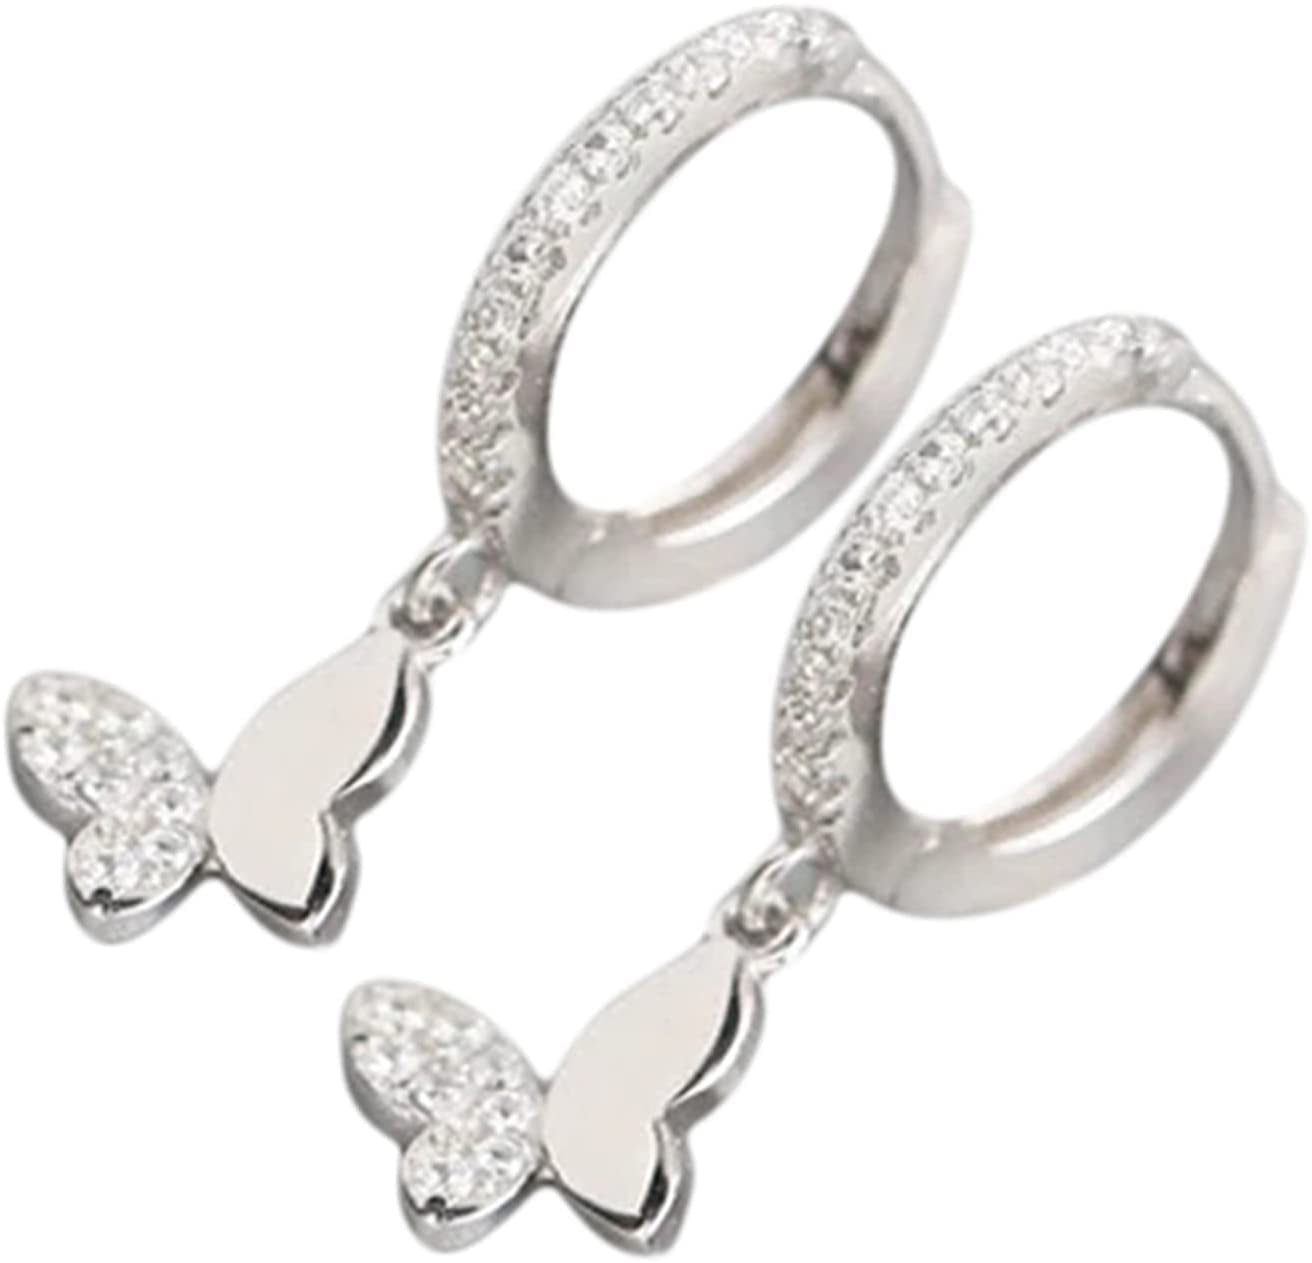 5Pairs Butterfly Shape CZ Crystal Zircon Hoop Earrings Silver Gold Plated Hoop Earrings New Design Charms Earrings